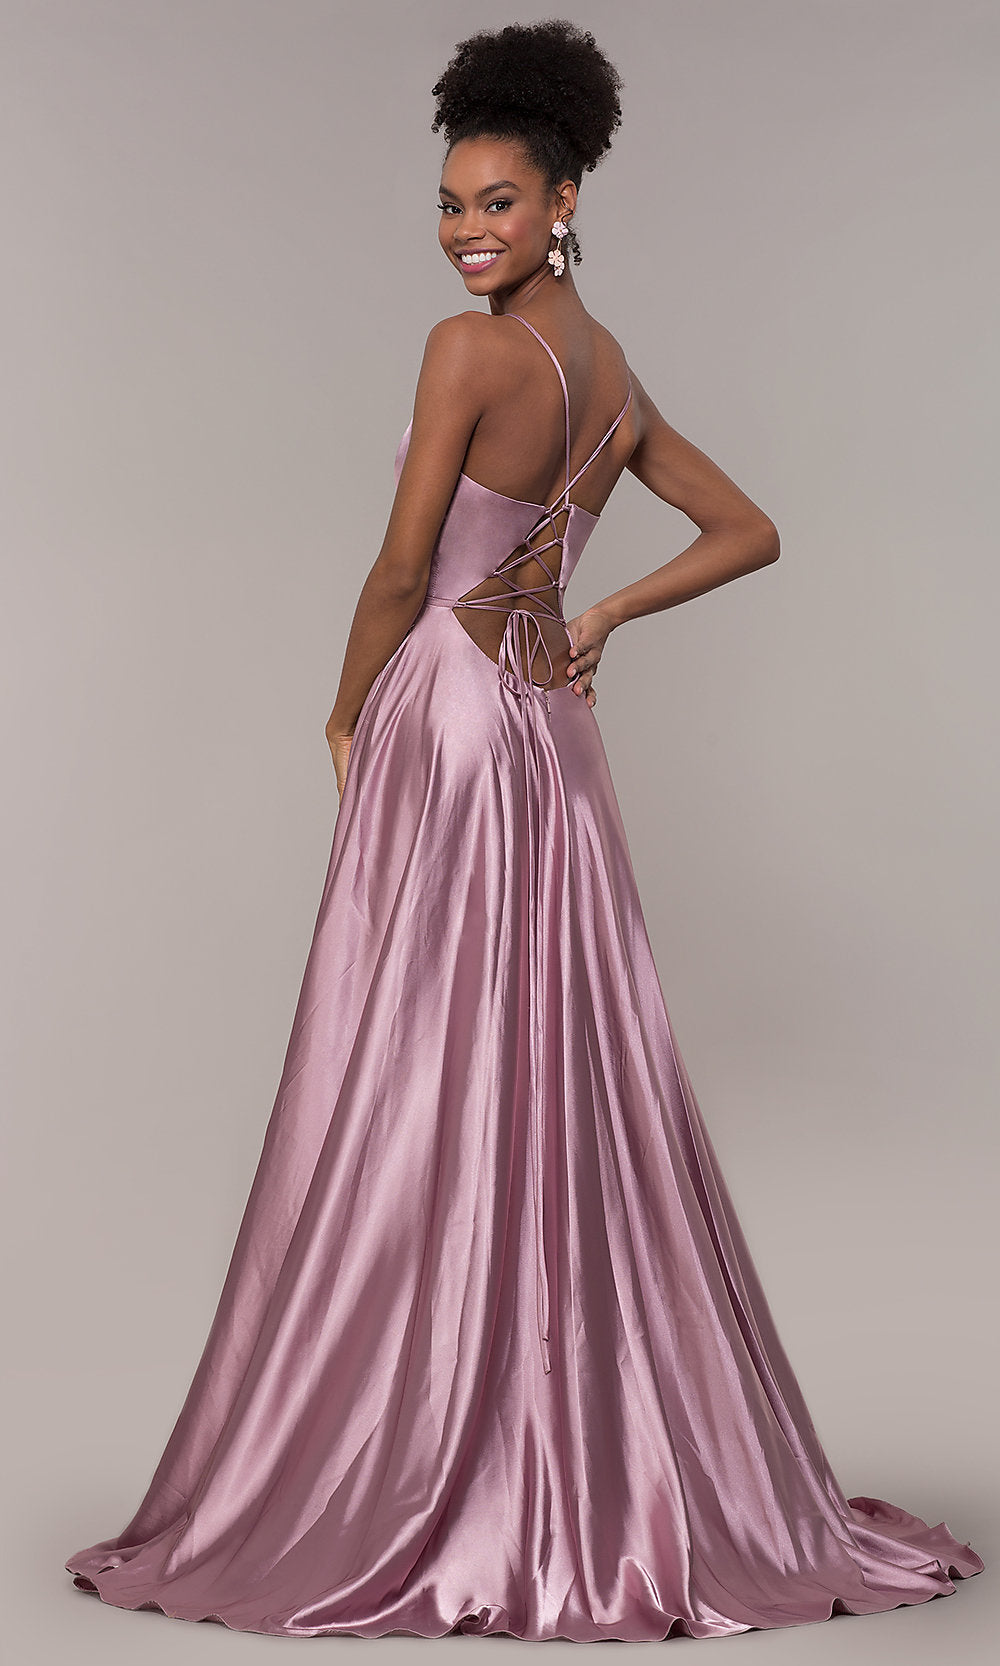  Long A-Line Faviana Formal Prom Dress with Pockets